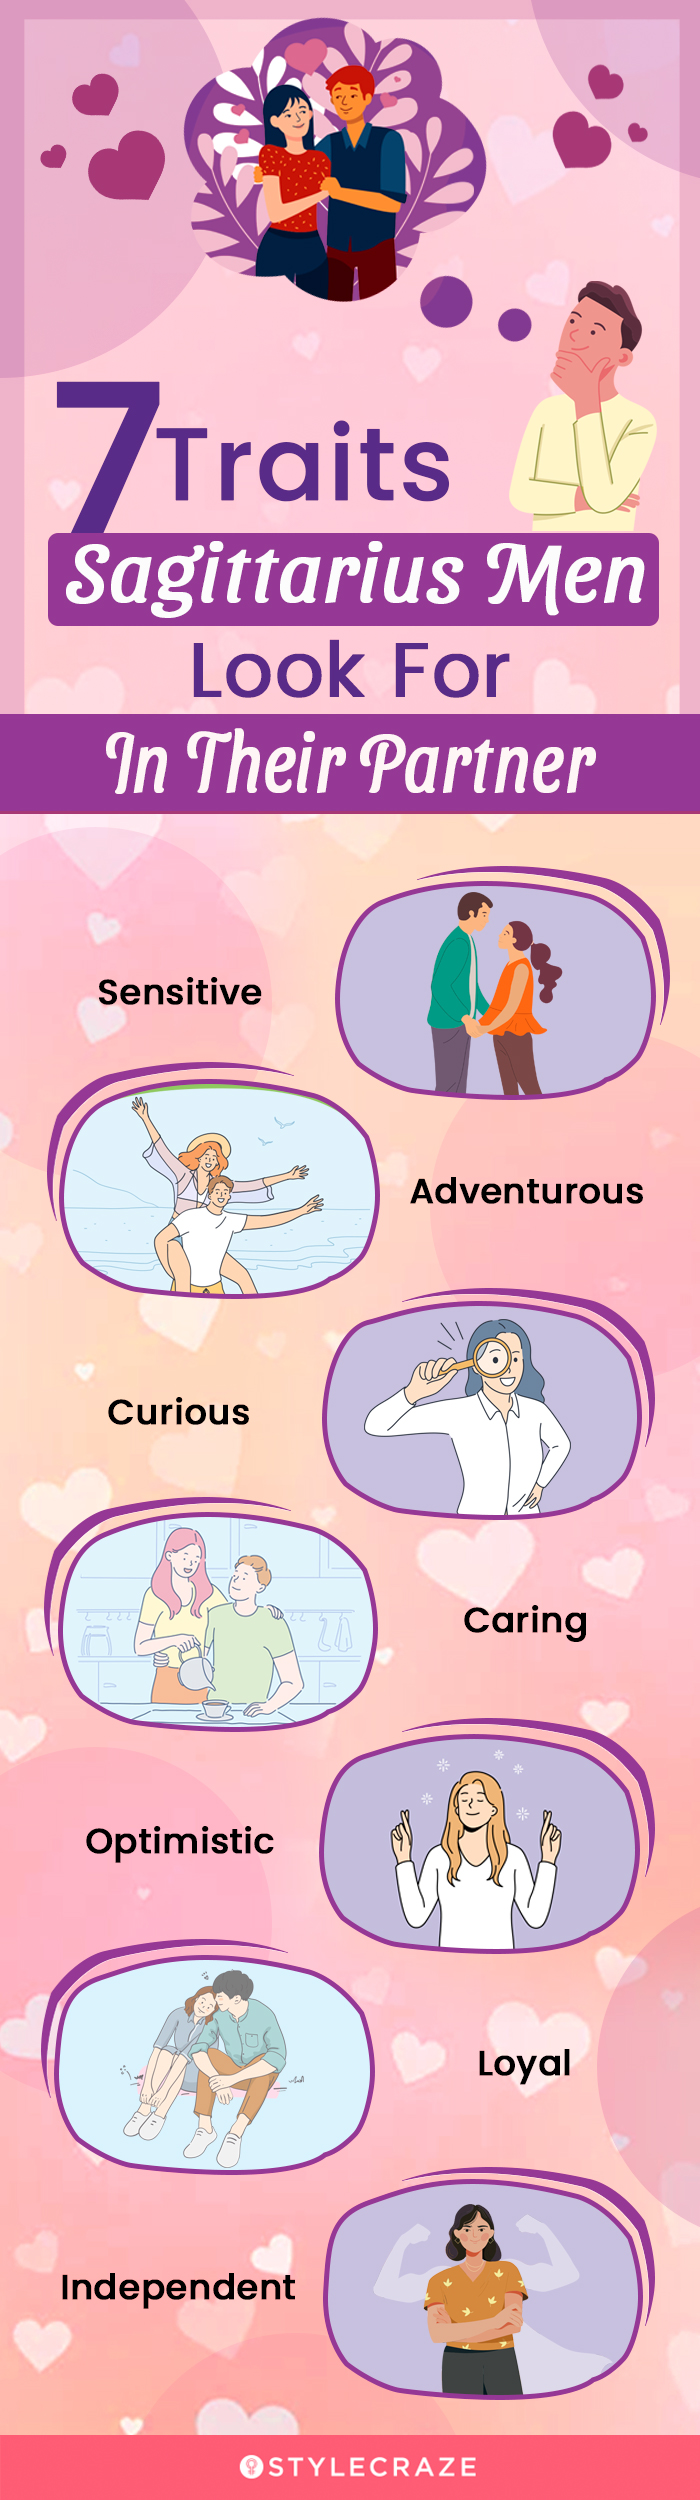 seven traits sagittarius men look for in their partner[infographic]